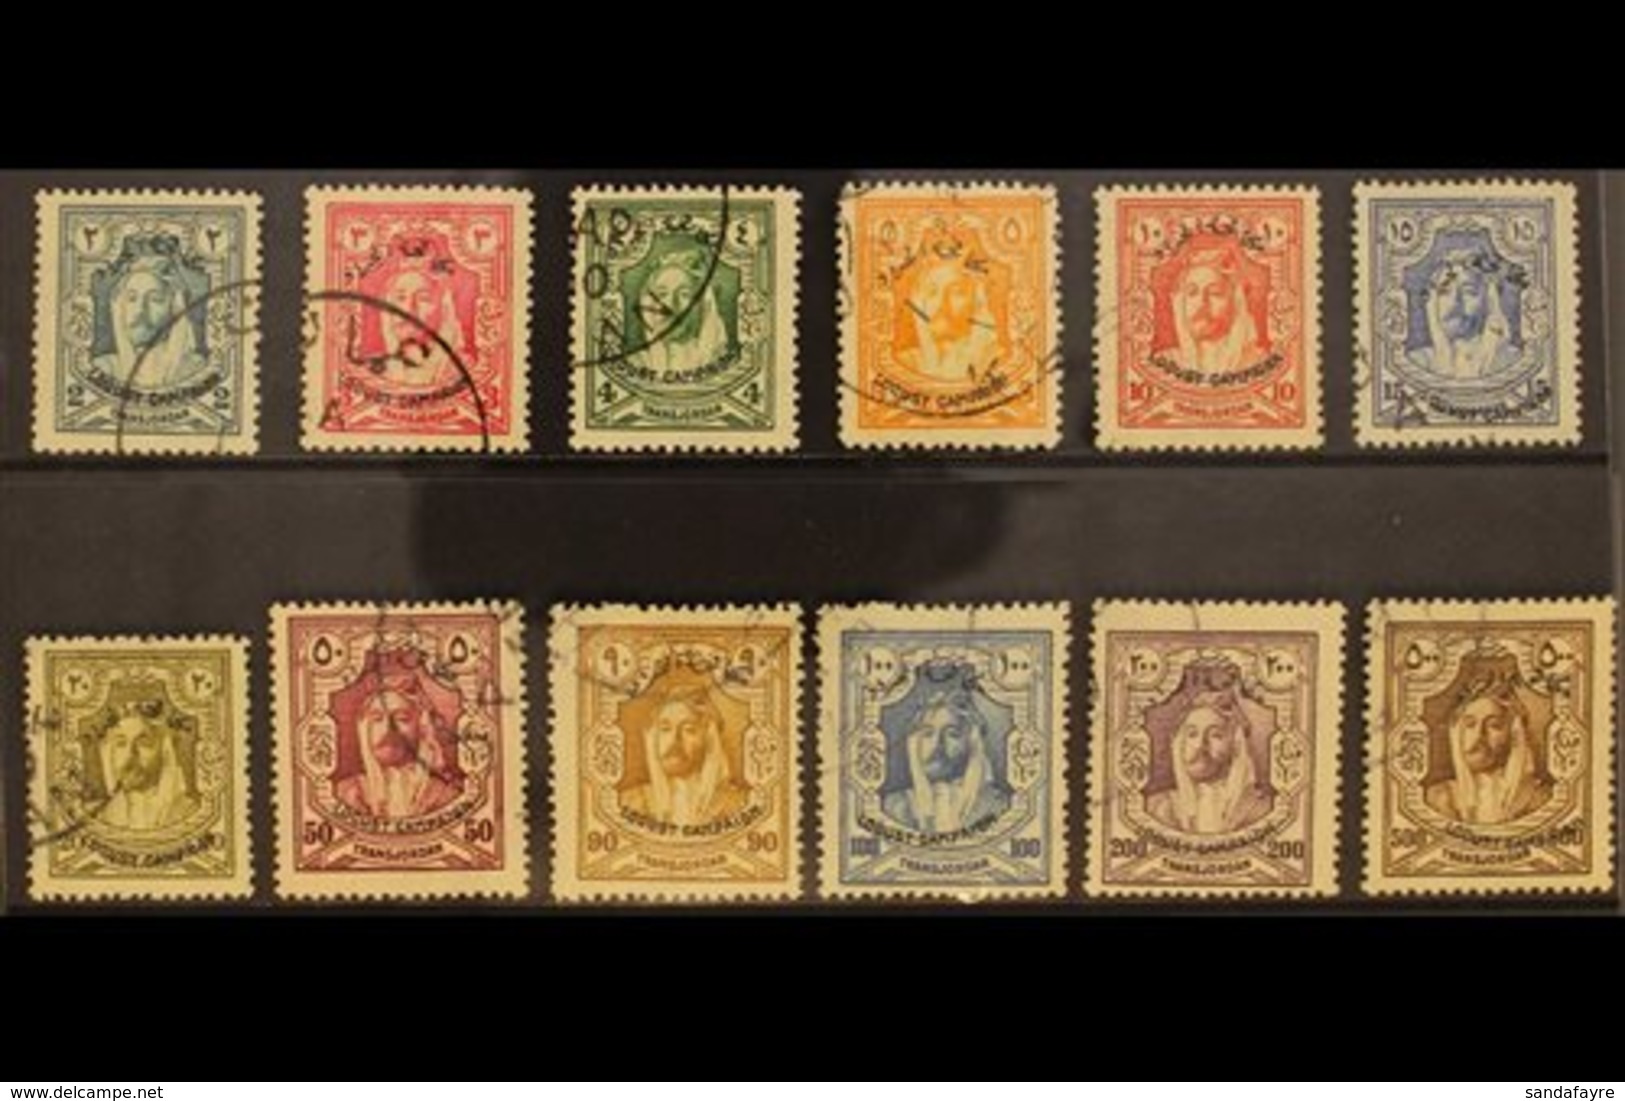 1930 LOCUST CAMPAIGN Emir "Locust Campaign" Overprinted Set, SG 183/94, Fine Used (12 Stamps) For More Images, Please Vi - Jordanien